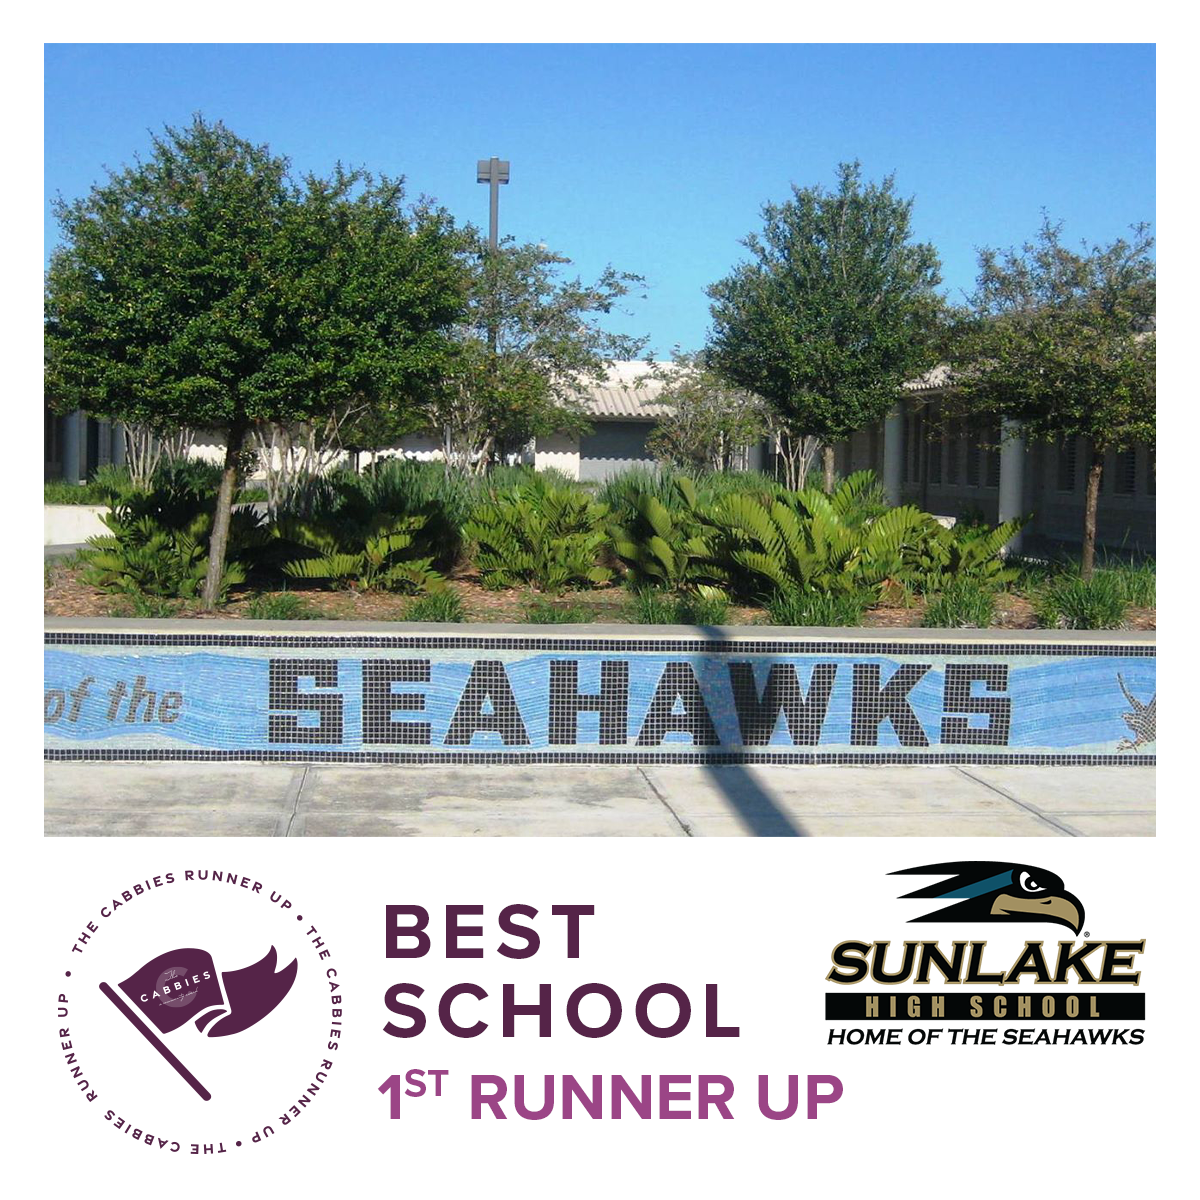 best school 1st runner up - Sun Lake High School